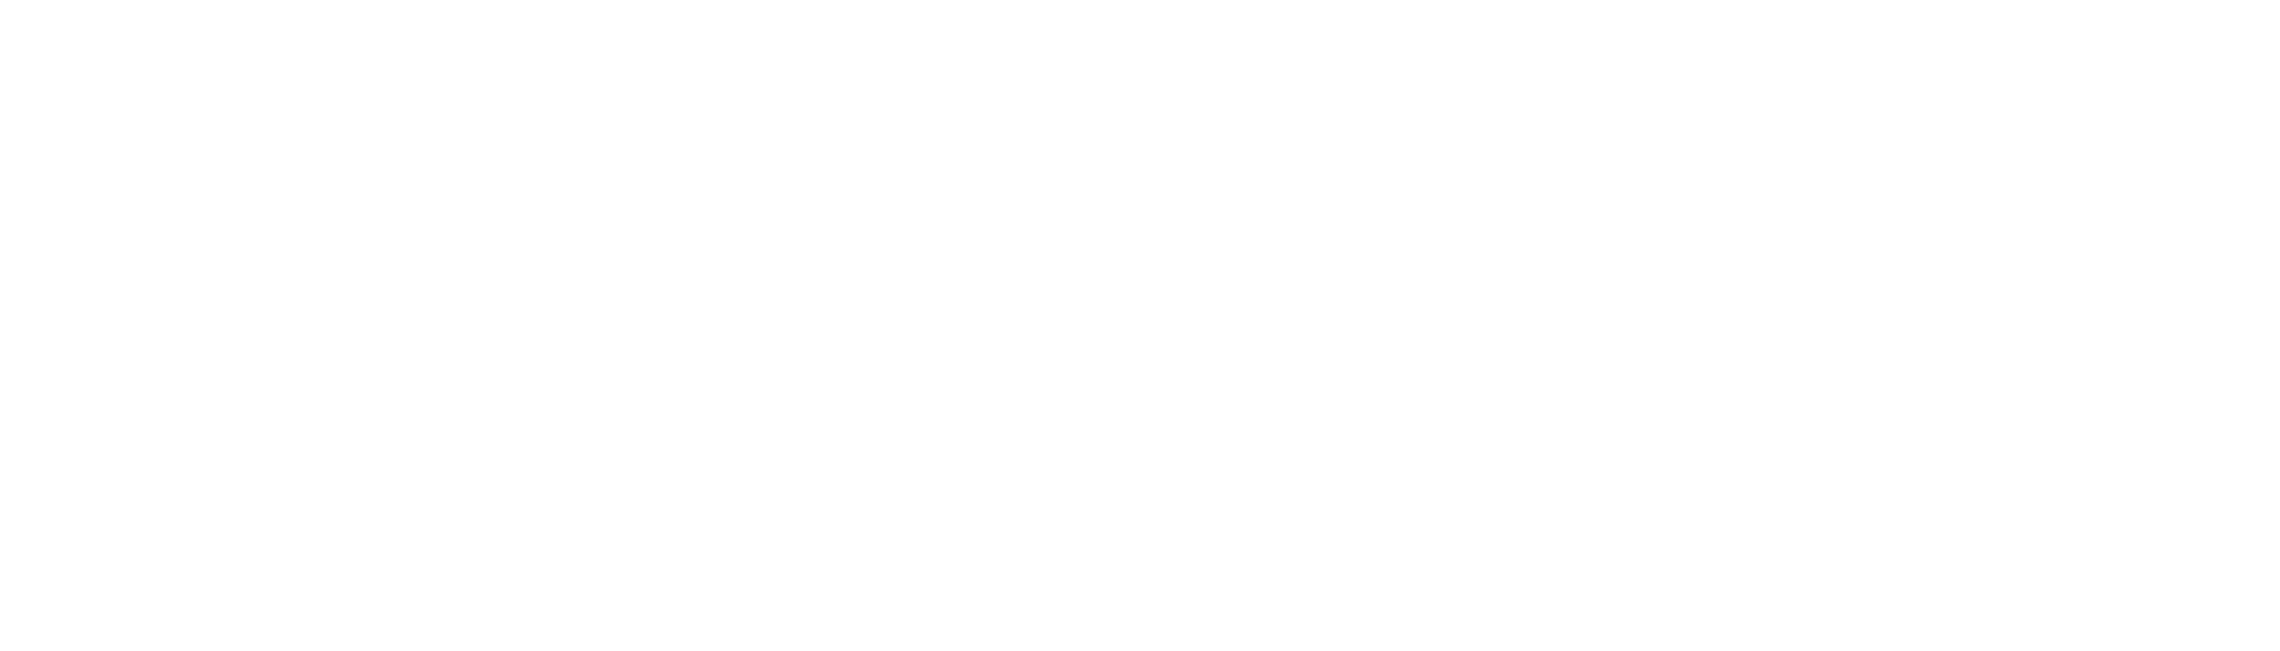 Московский университет им. А.С. ГРИБОЕДОВА